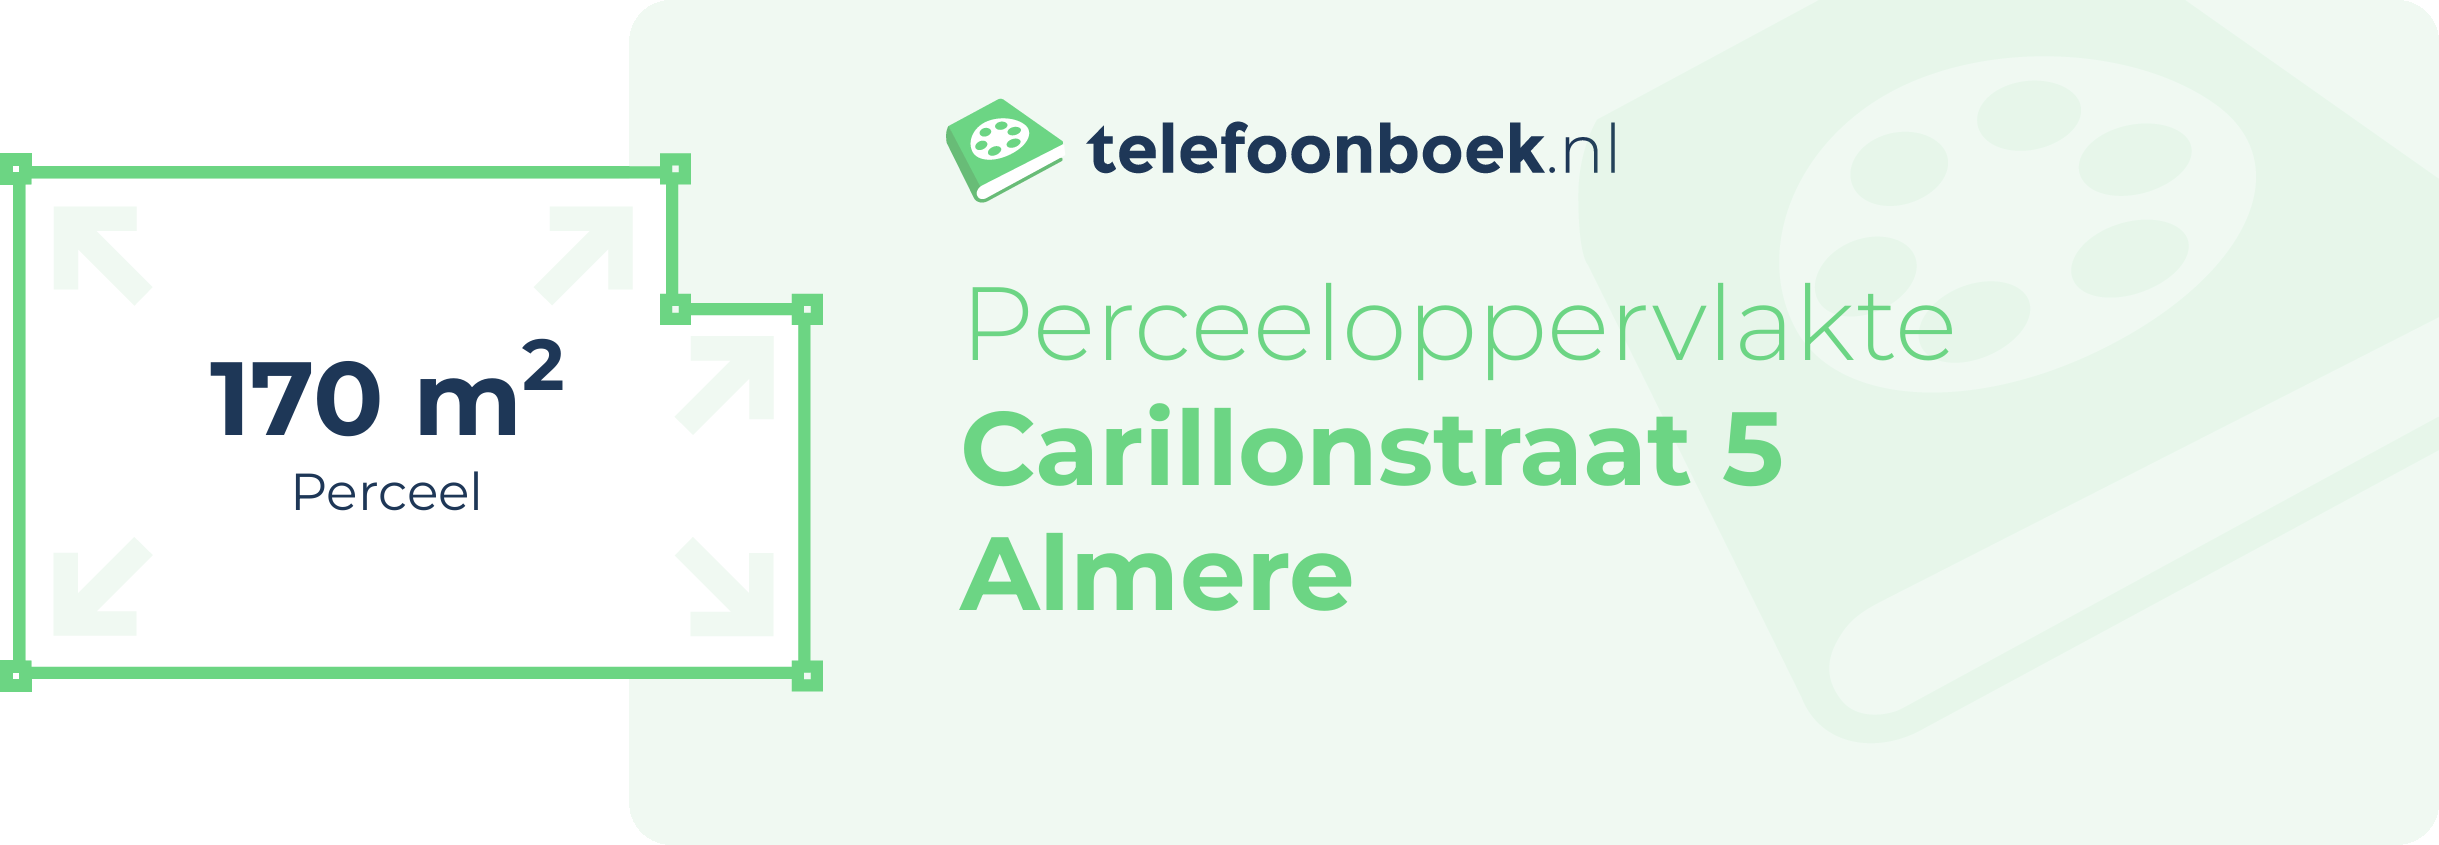 Perceeloppervlakte Carillonstraat 5 Almere